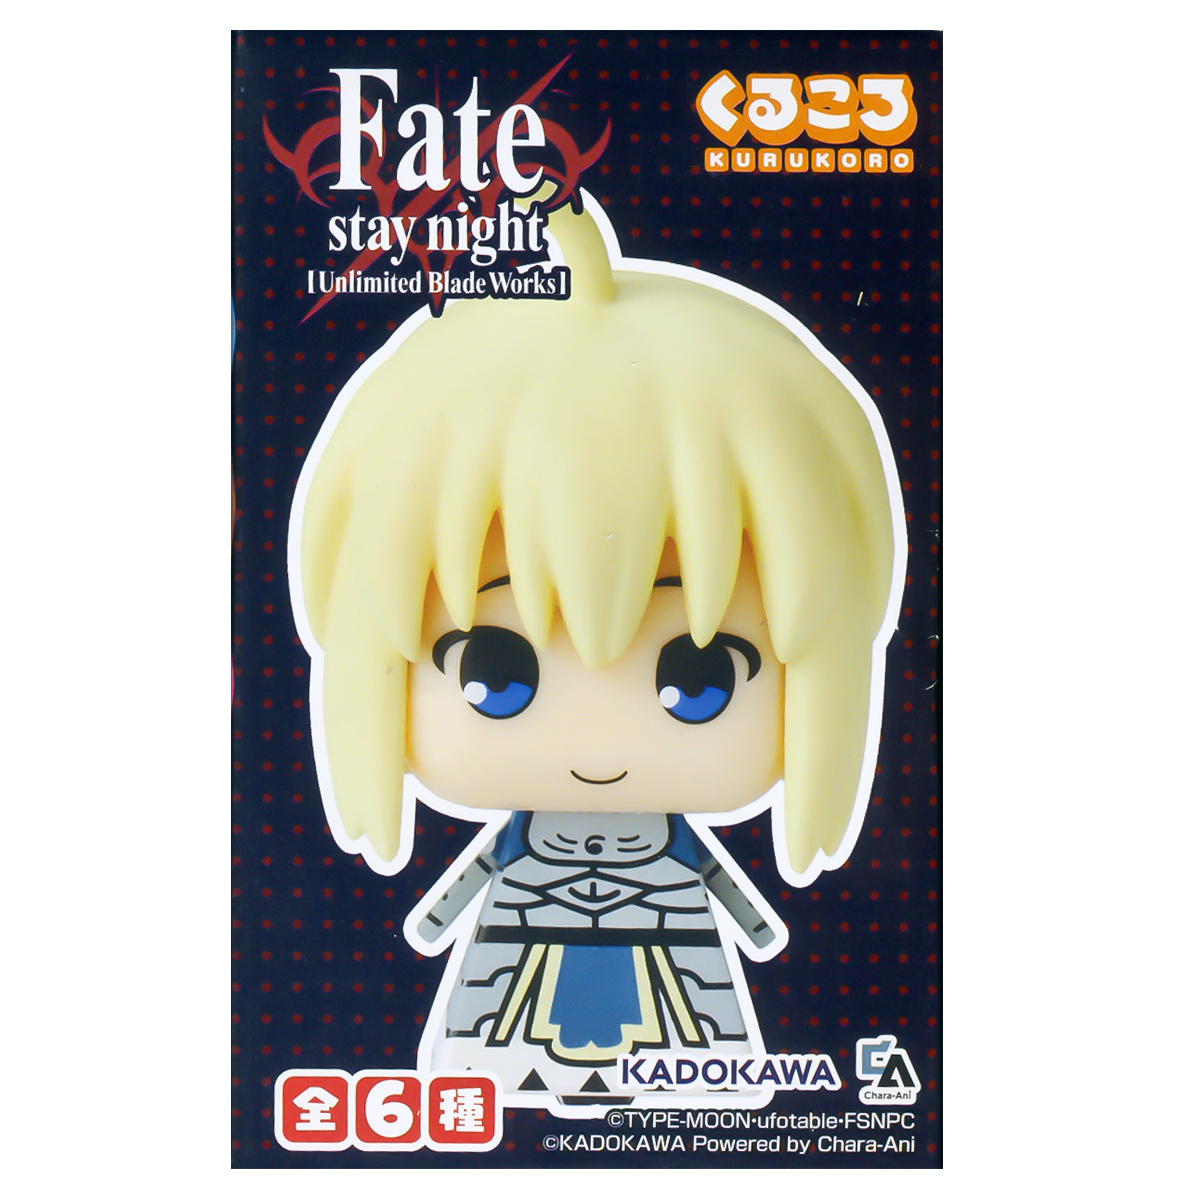 Fate Stay Night Blind Box Unlimited Blade Works Action Trading Figure Kadokawa